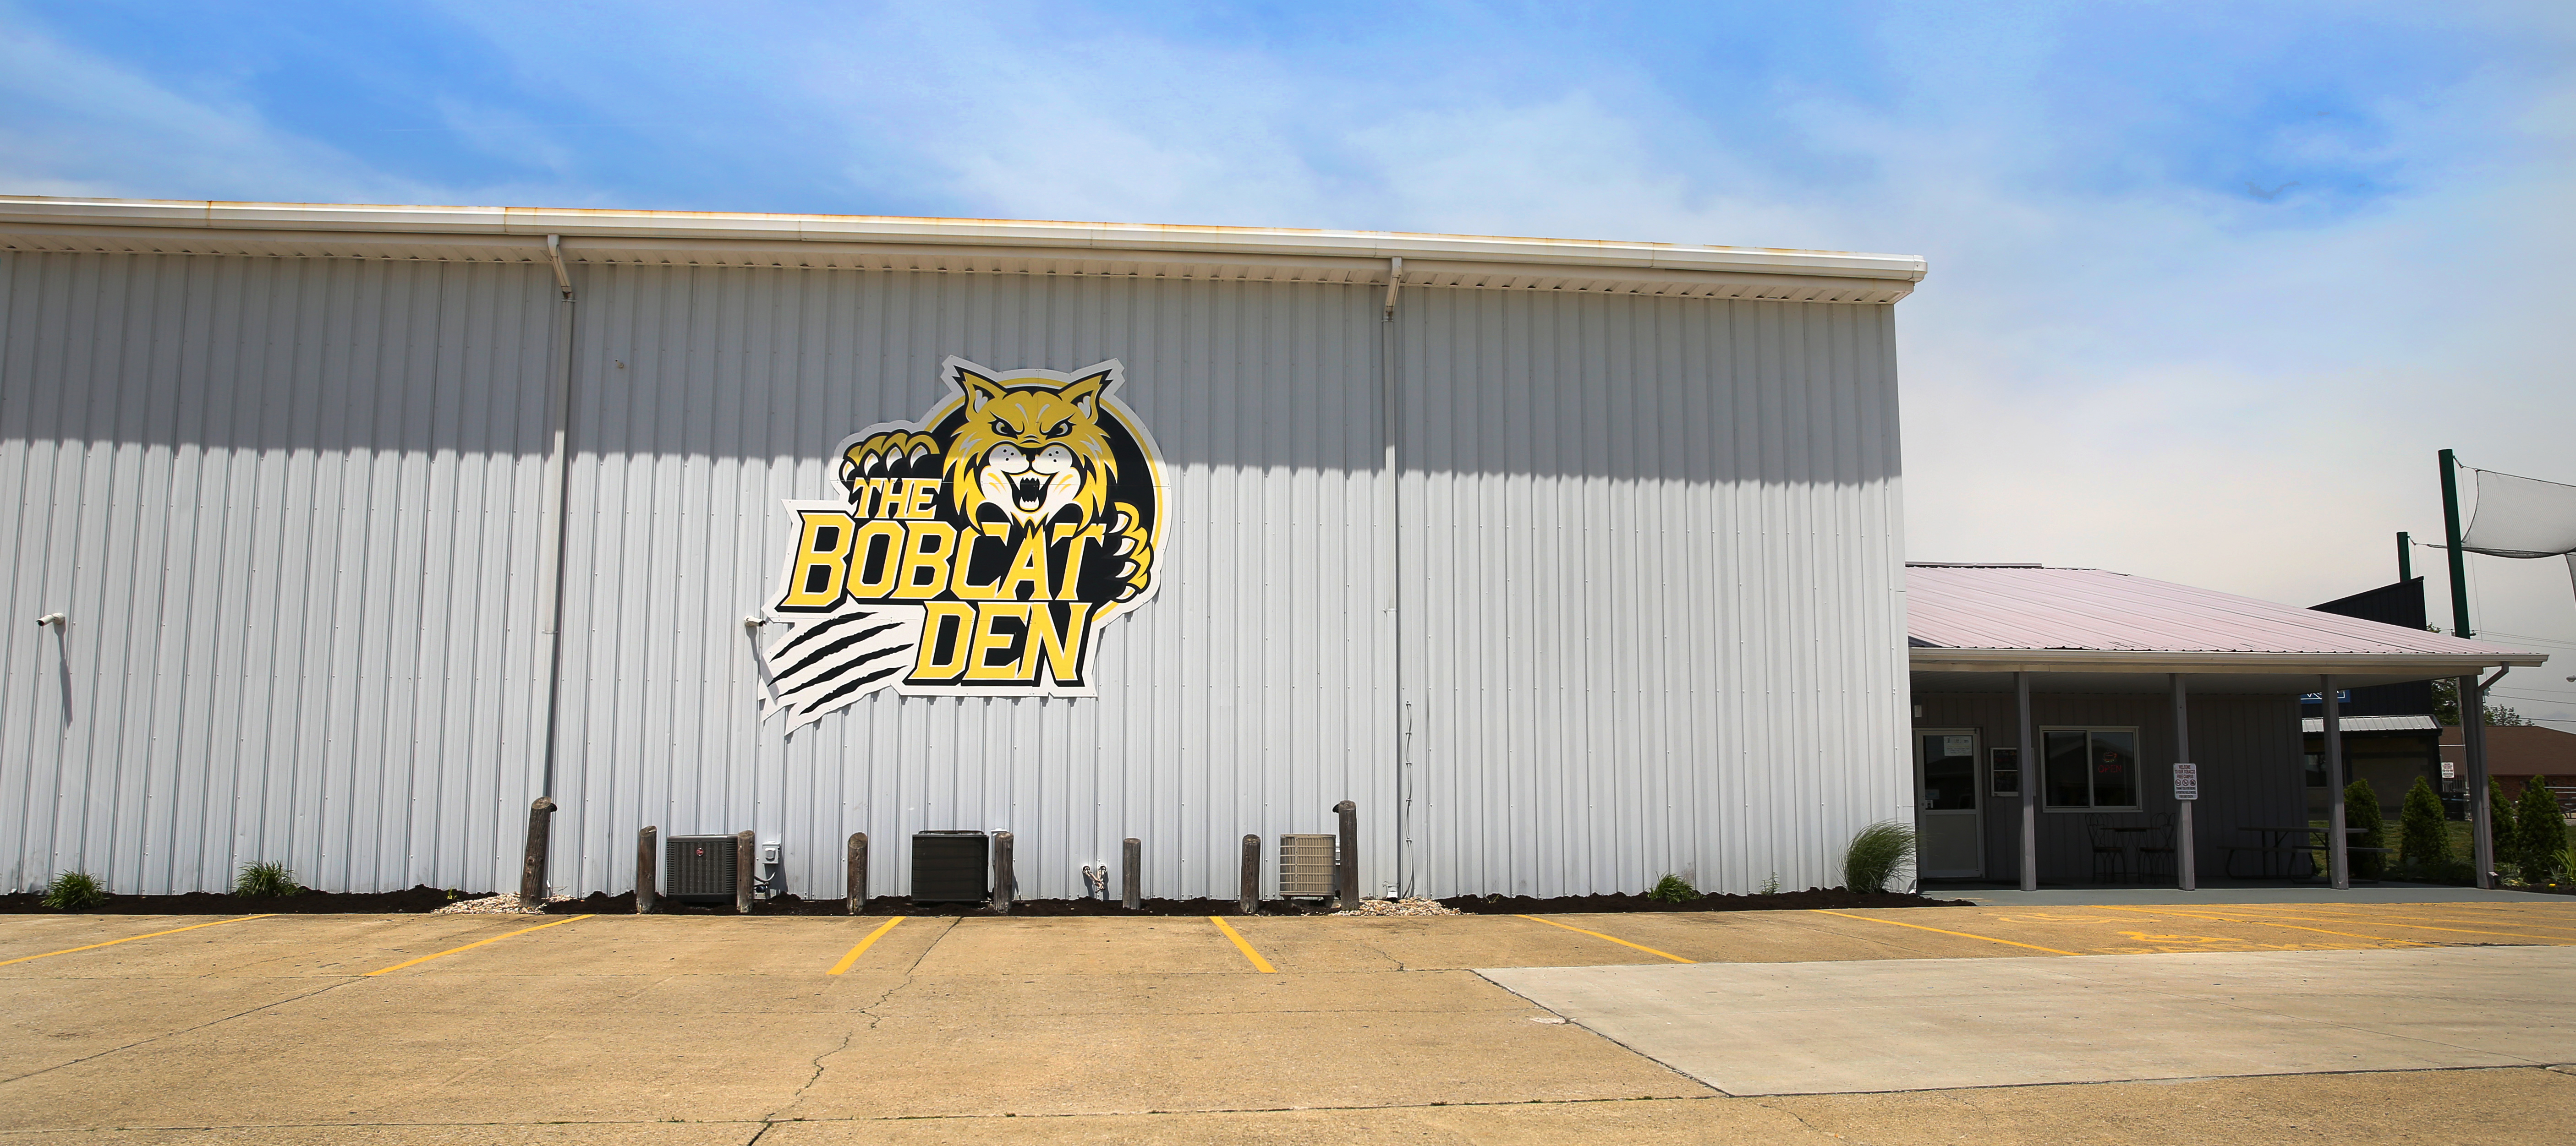 The Bobcat Den building